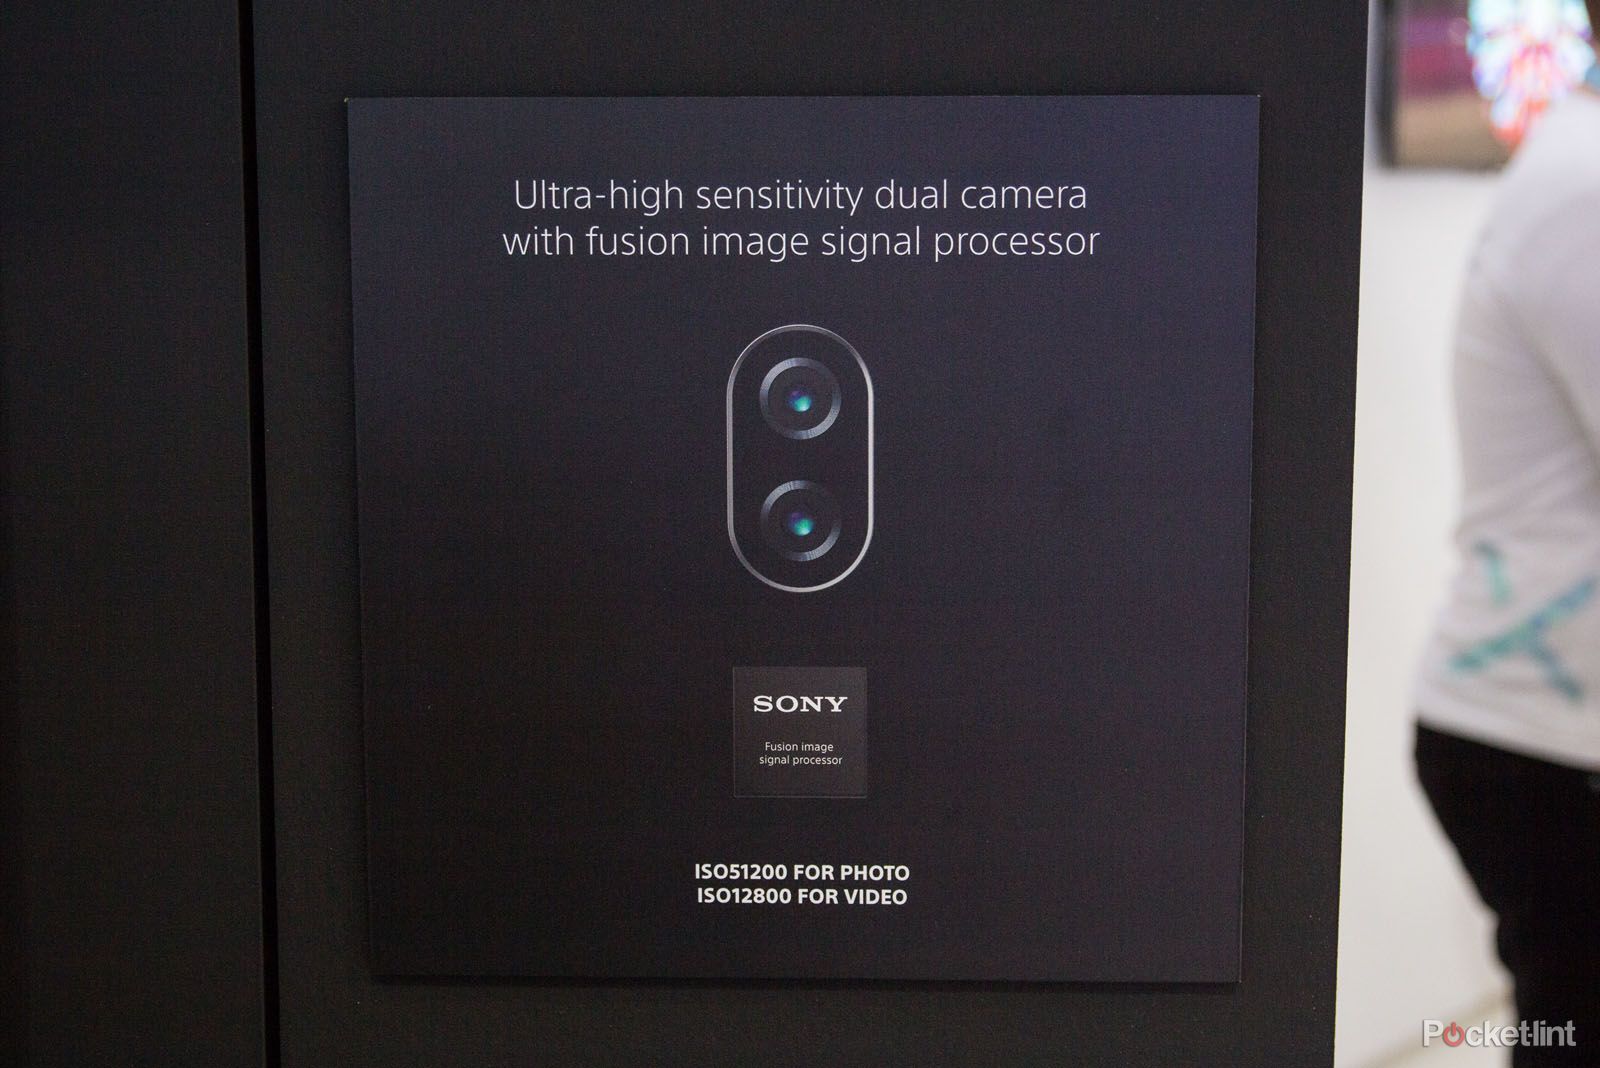 Sony Xperia dual camera system image 1